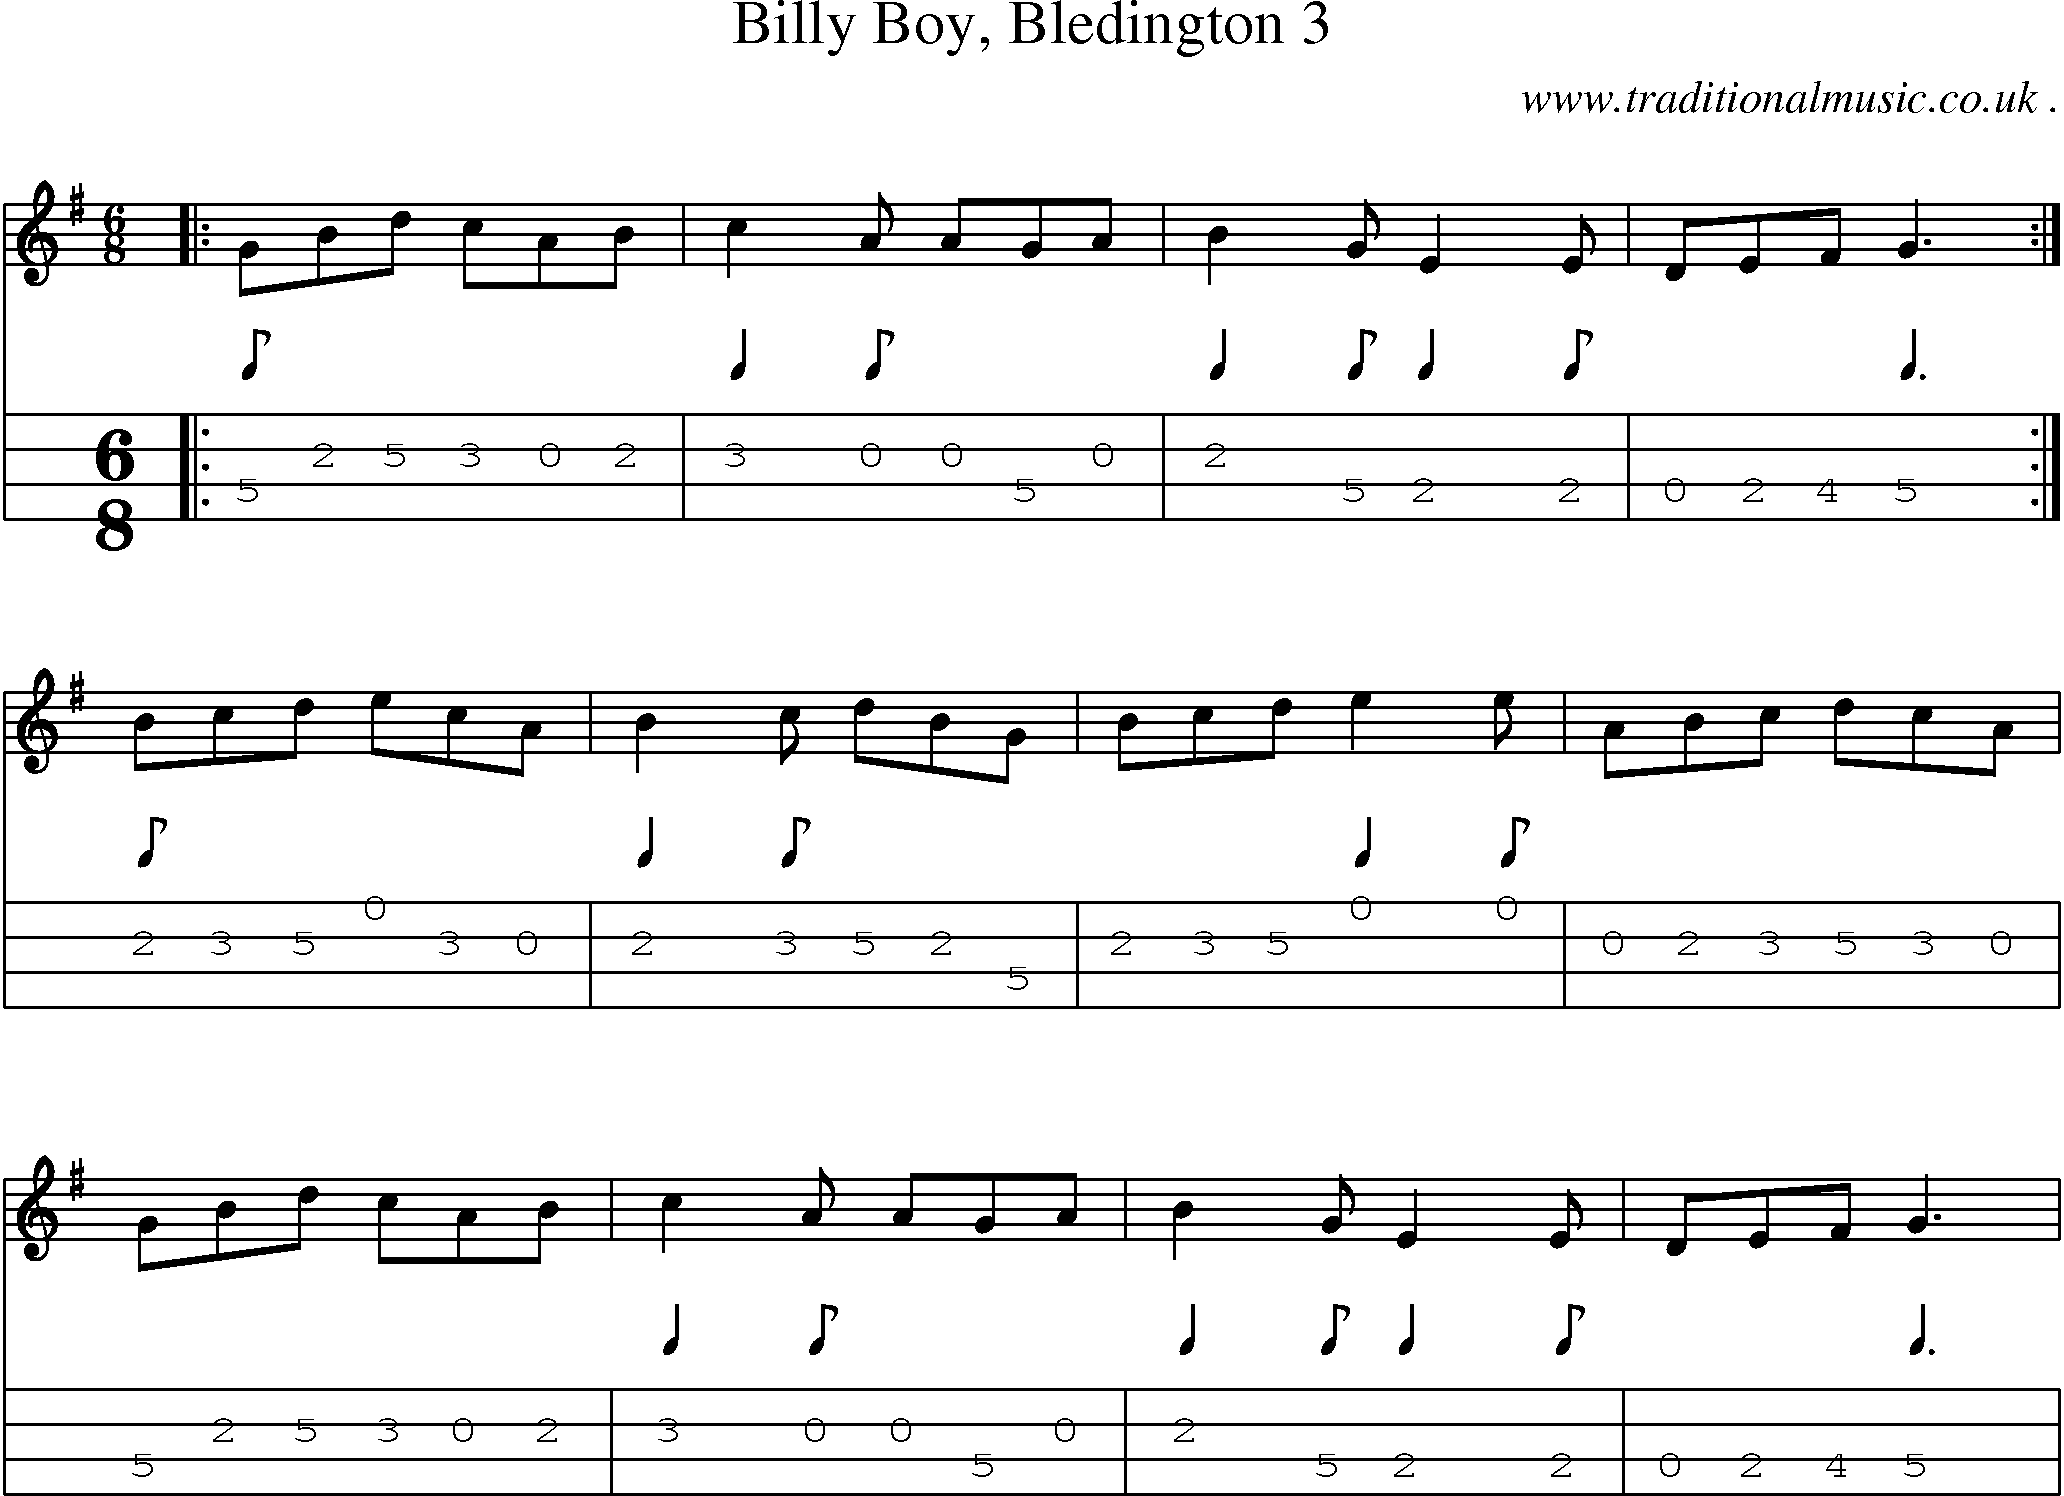 Sheet-Music and Mandolin Tabs for Billy Boy Bledington 3